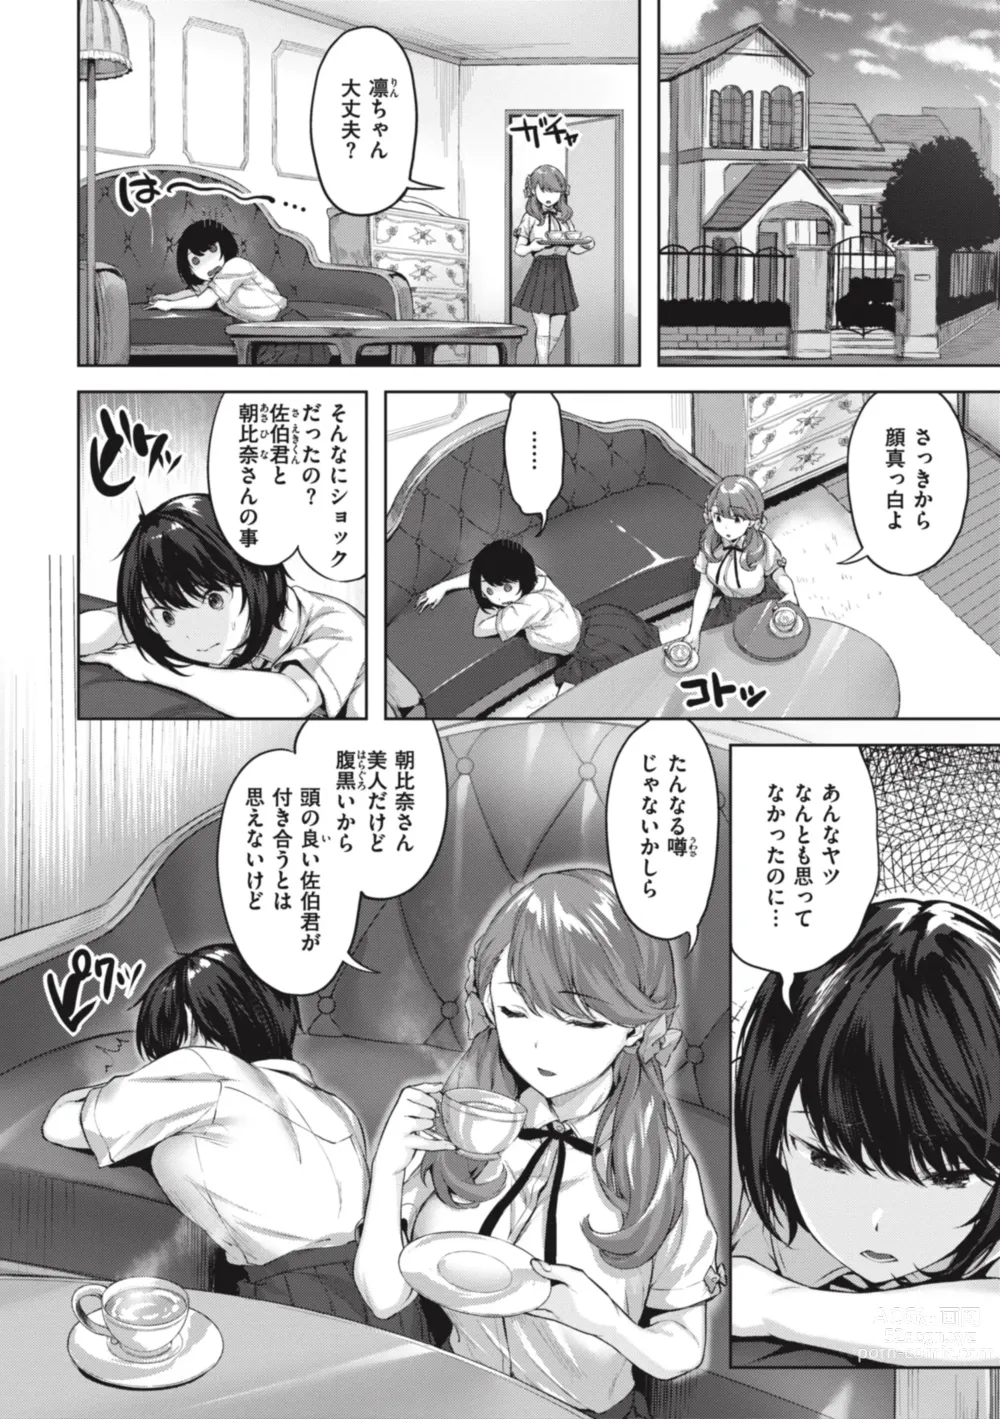 Page 8 of manga Midarete Tenshi - Nasty Angel